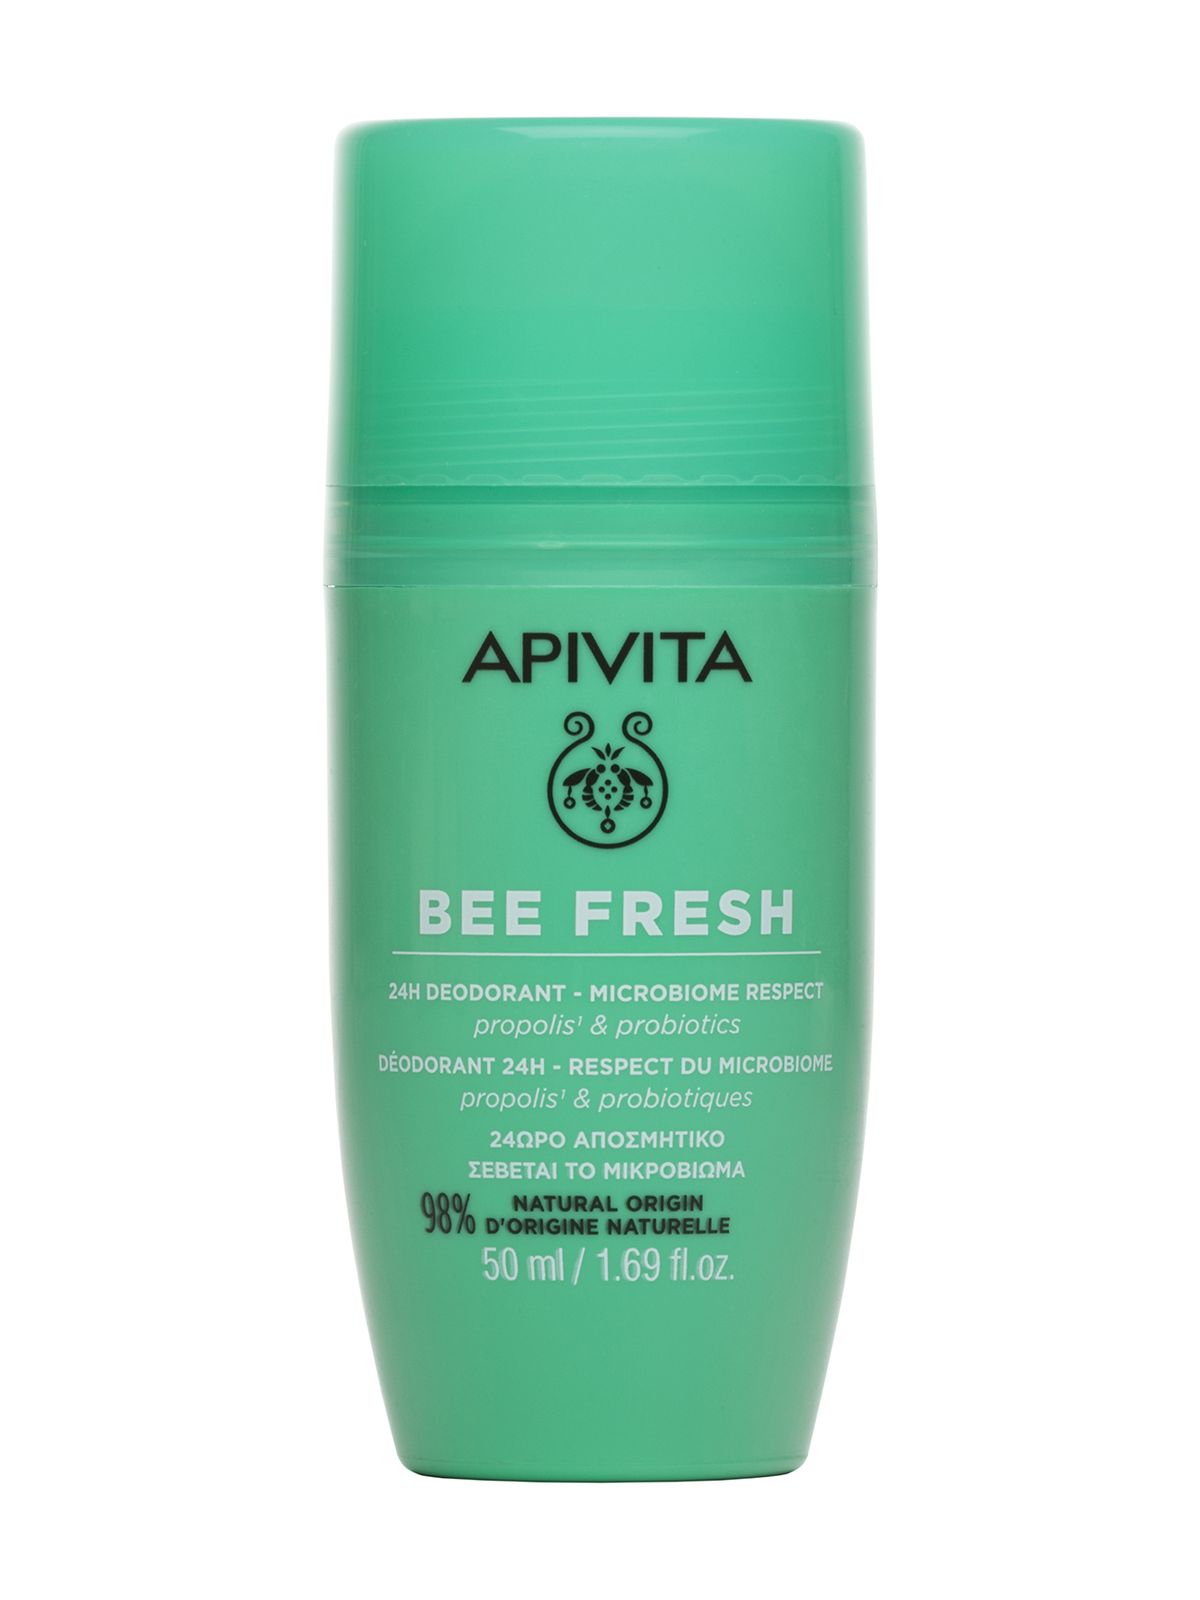 Дезодорант Apivita Bee Fresh 24H Deodorant Microbiome Respect Propolis & Probiotics apivita дезодорант с прополисом и пробиотиками be fresh 24 часа защиты 12 50 мл